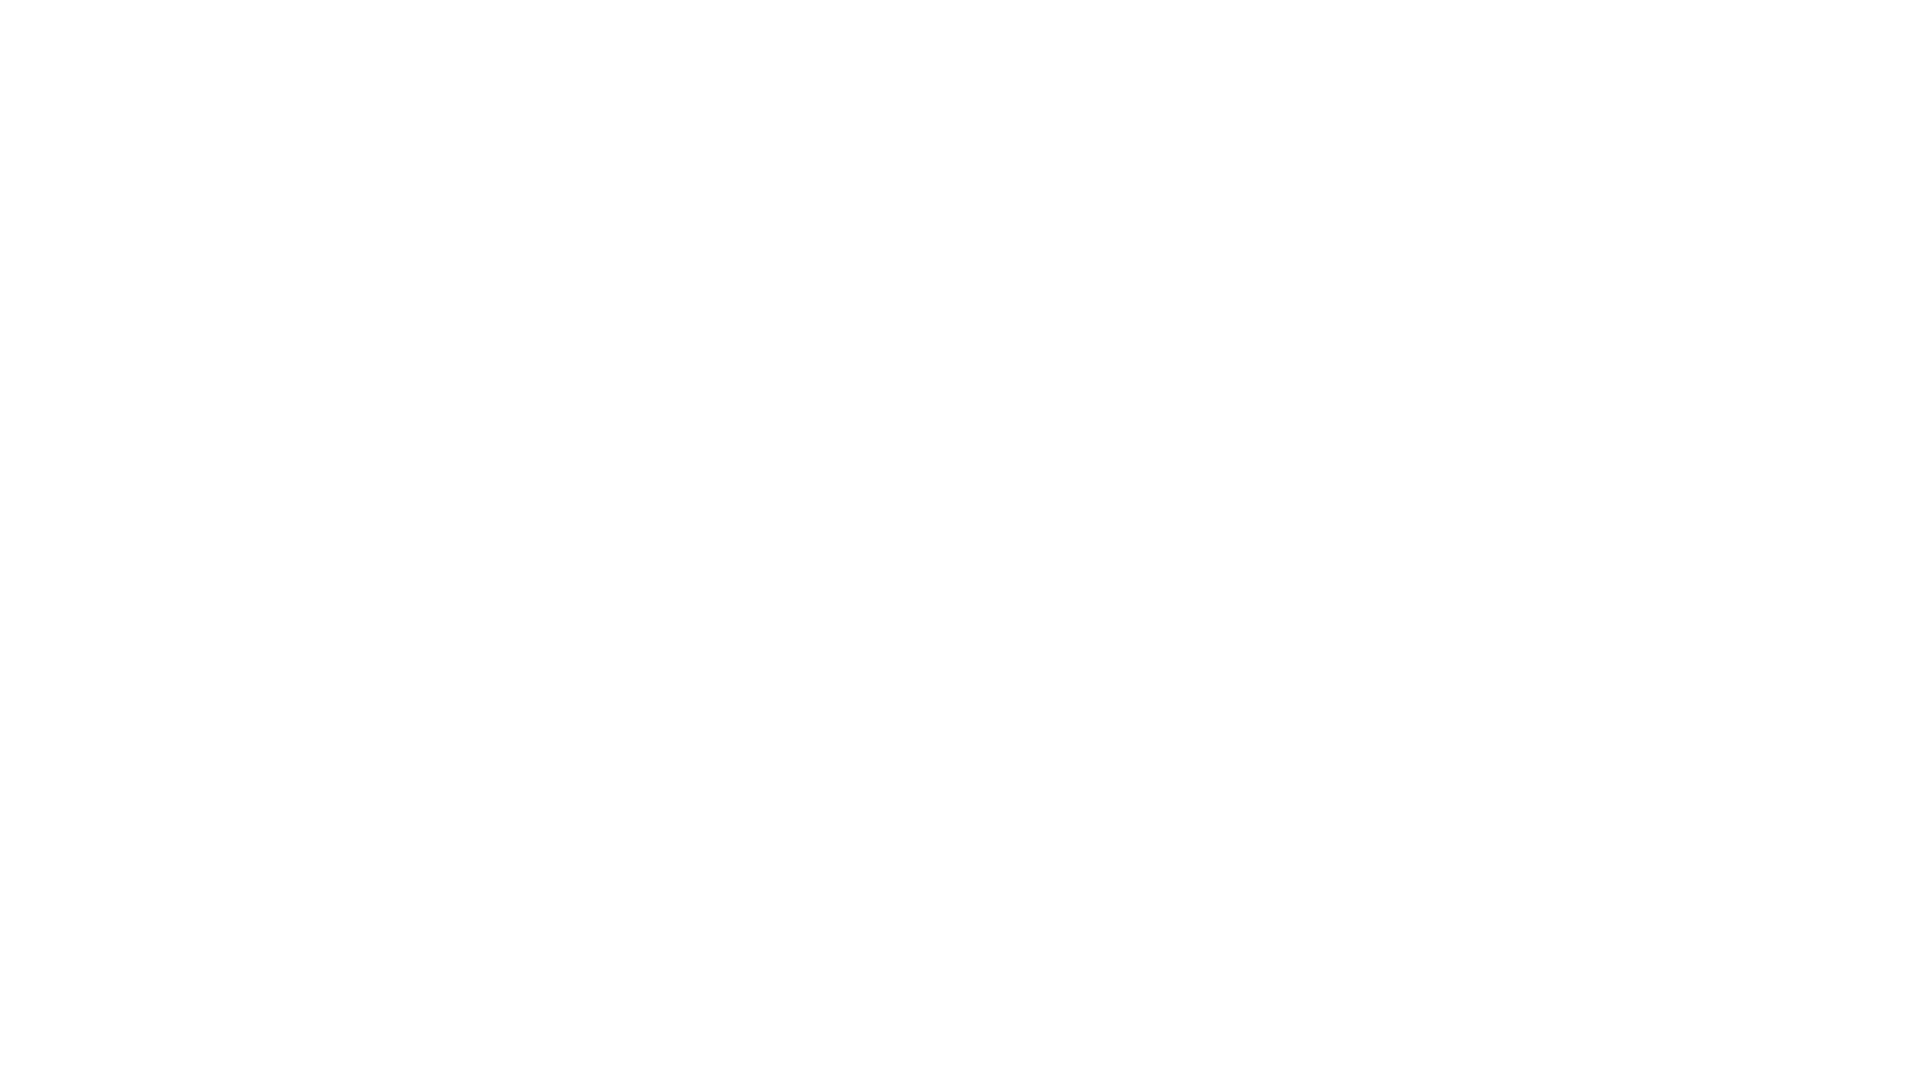 United States Real Estate Investor - Real estate investing media - Features logo